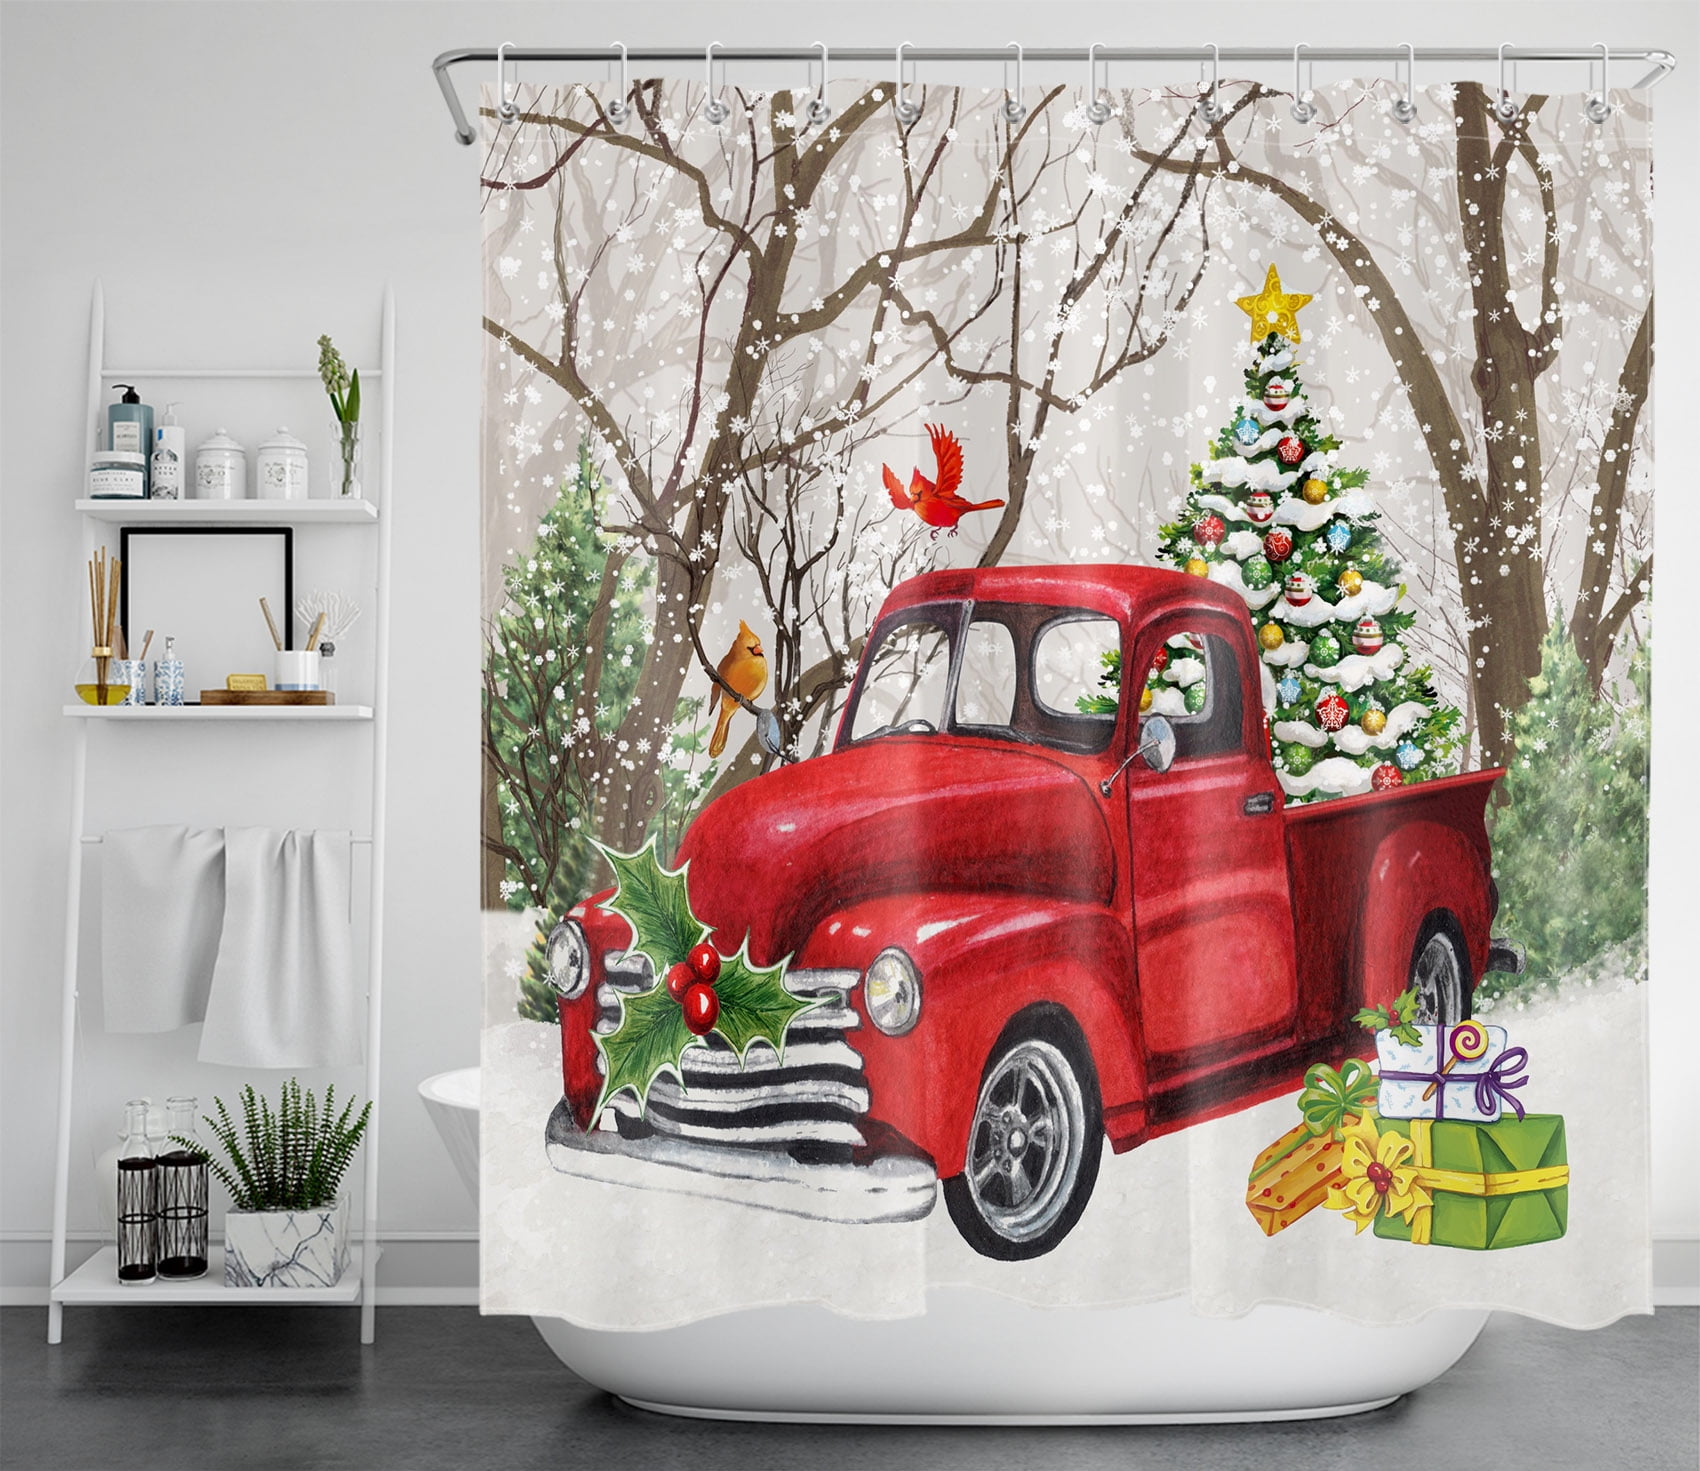 Green Truck Fir Tree Shower Curtain Red Christmas Balls Bathroom Accessory Sets 